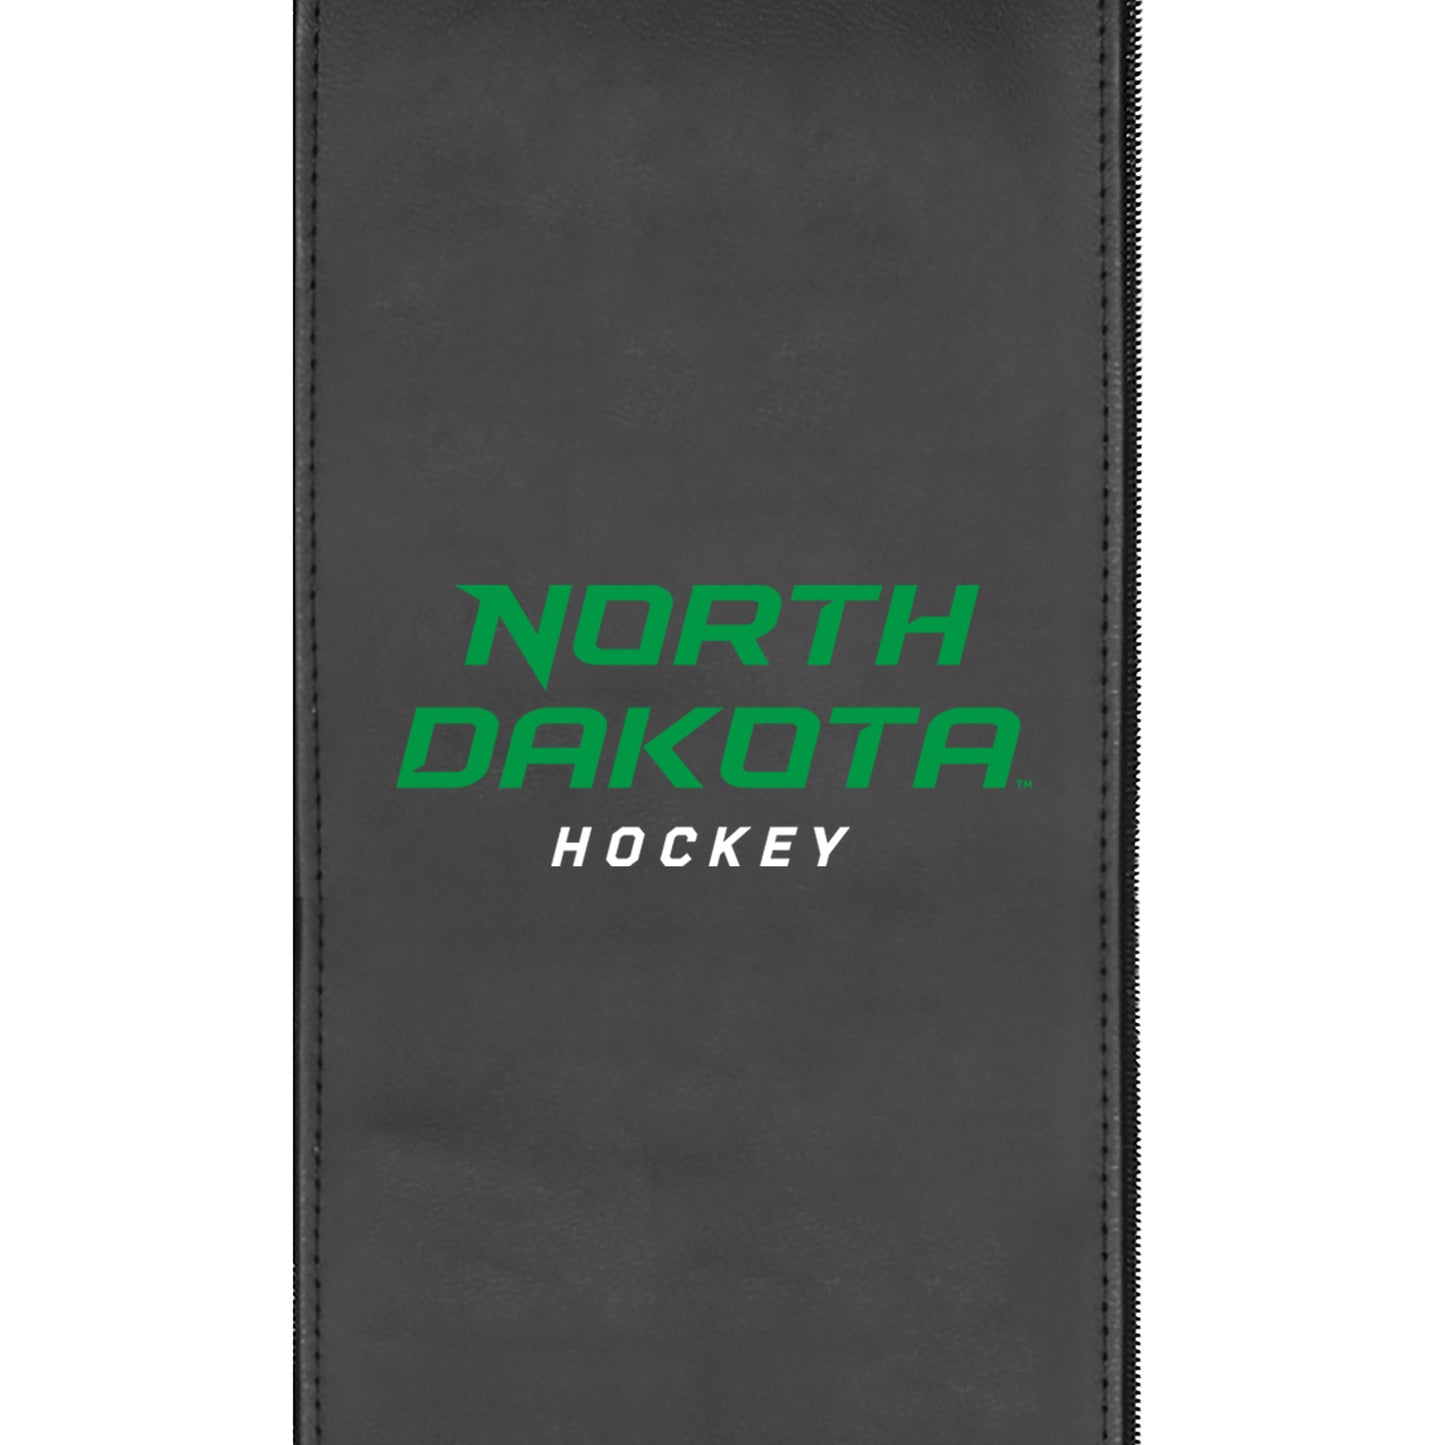 Relax Home Theater Recliner with University of North Dakota Hockey Logo